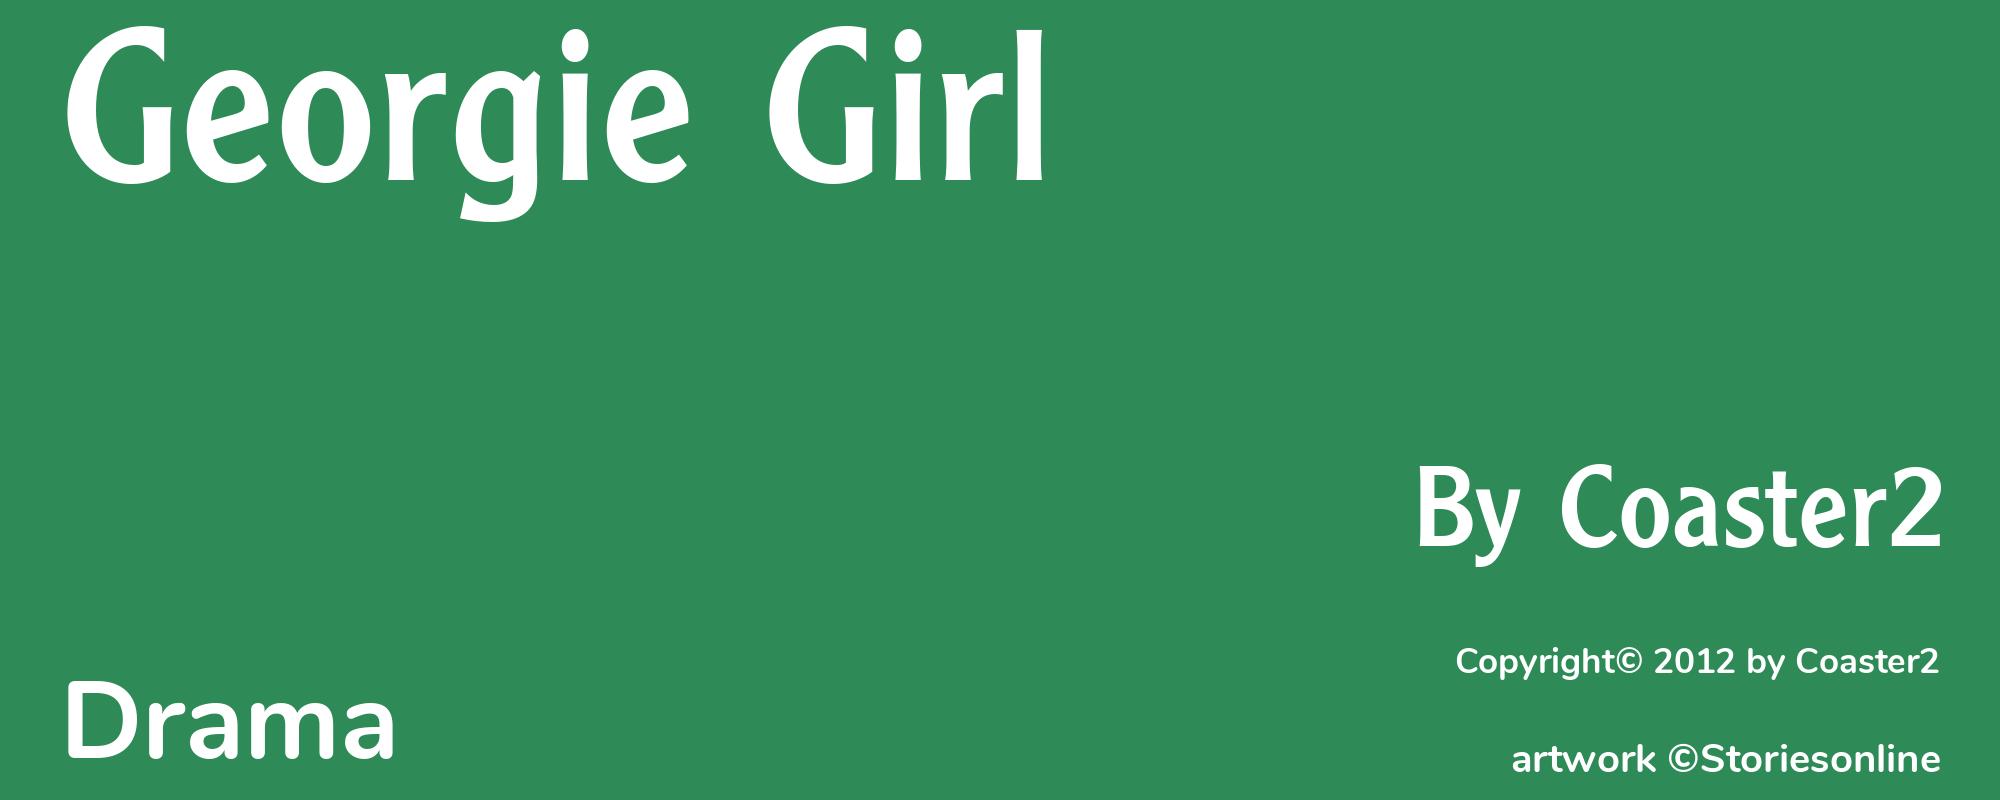 Georgie Girl - Cover